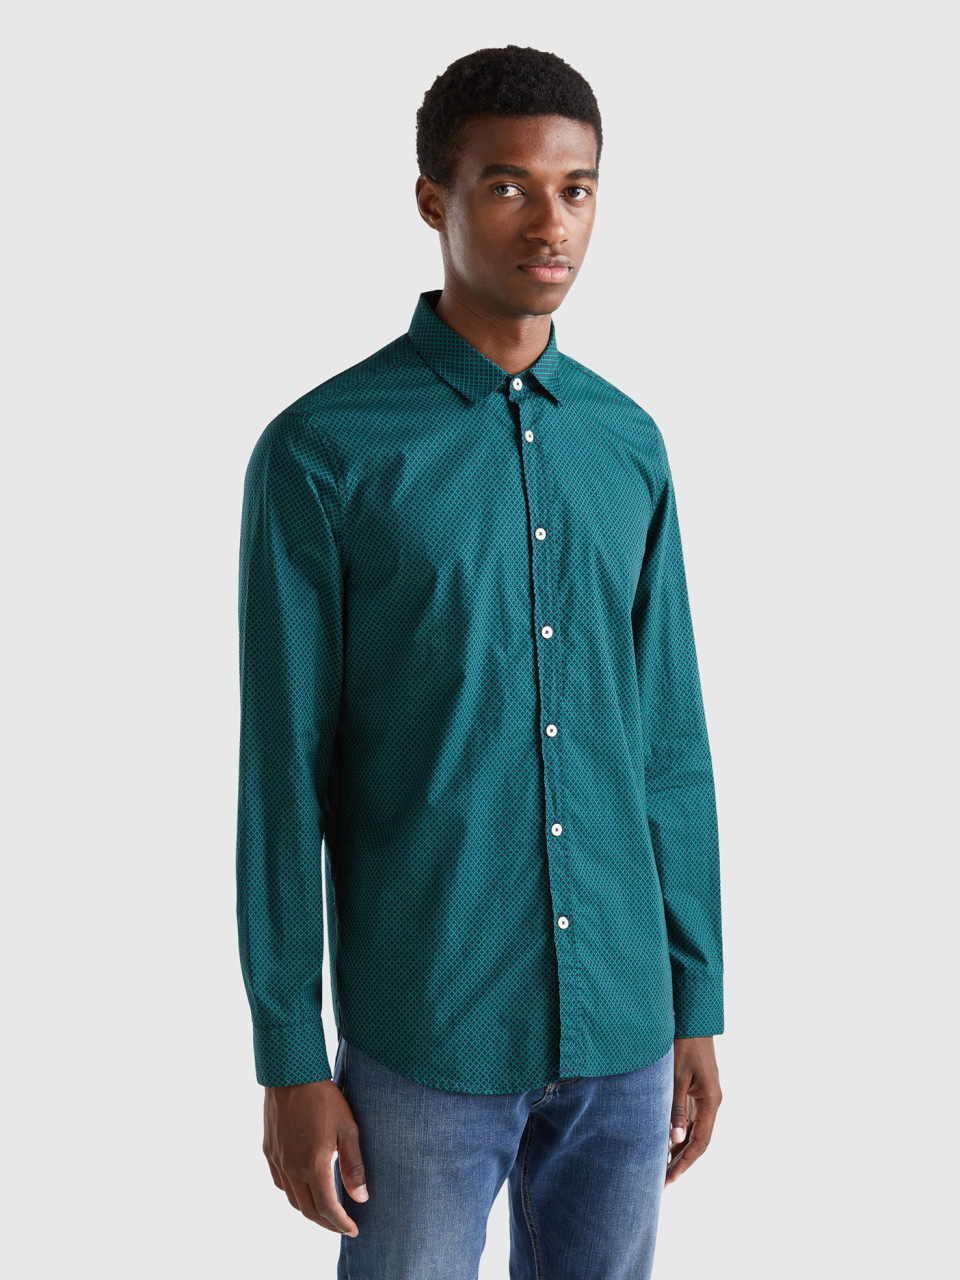 Benetton, Patterned Slim Fit Shirt, Dark Green, Men